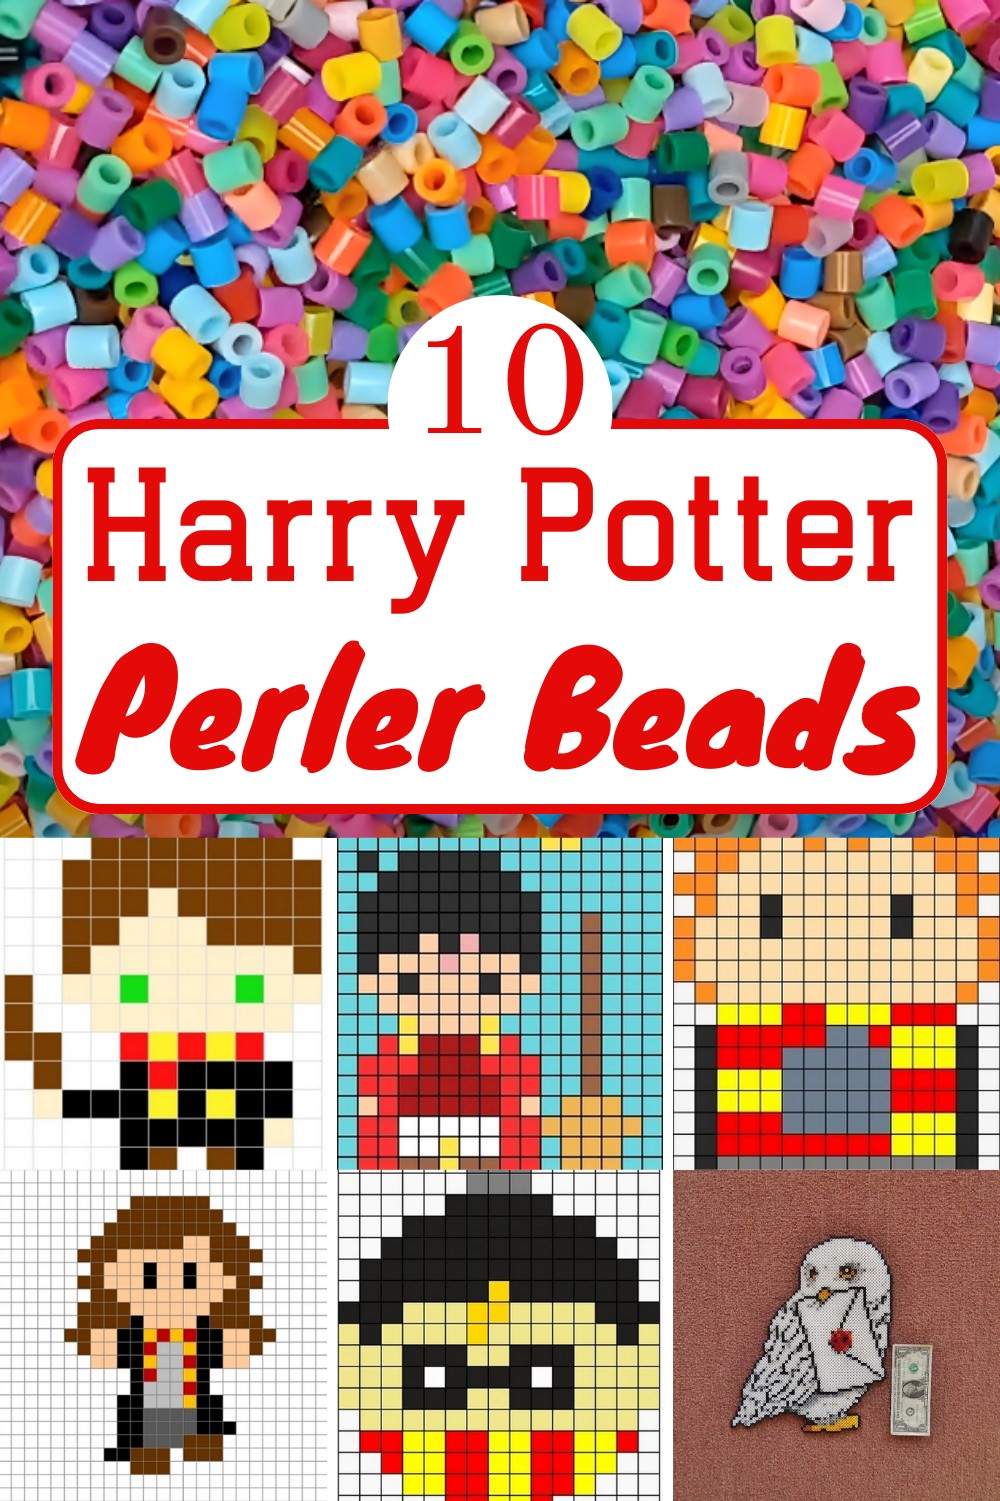 8 Perler Bead Letters Patterns Free - DIY Crafts